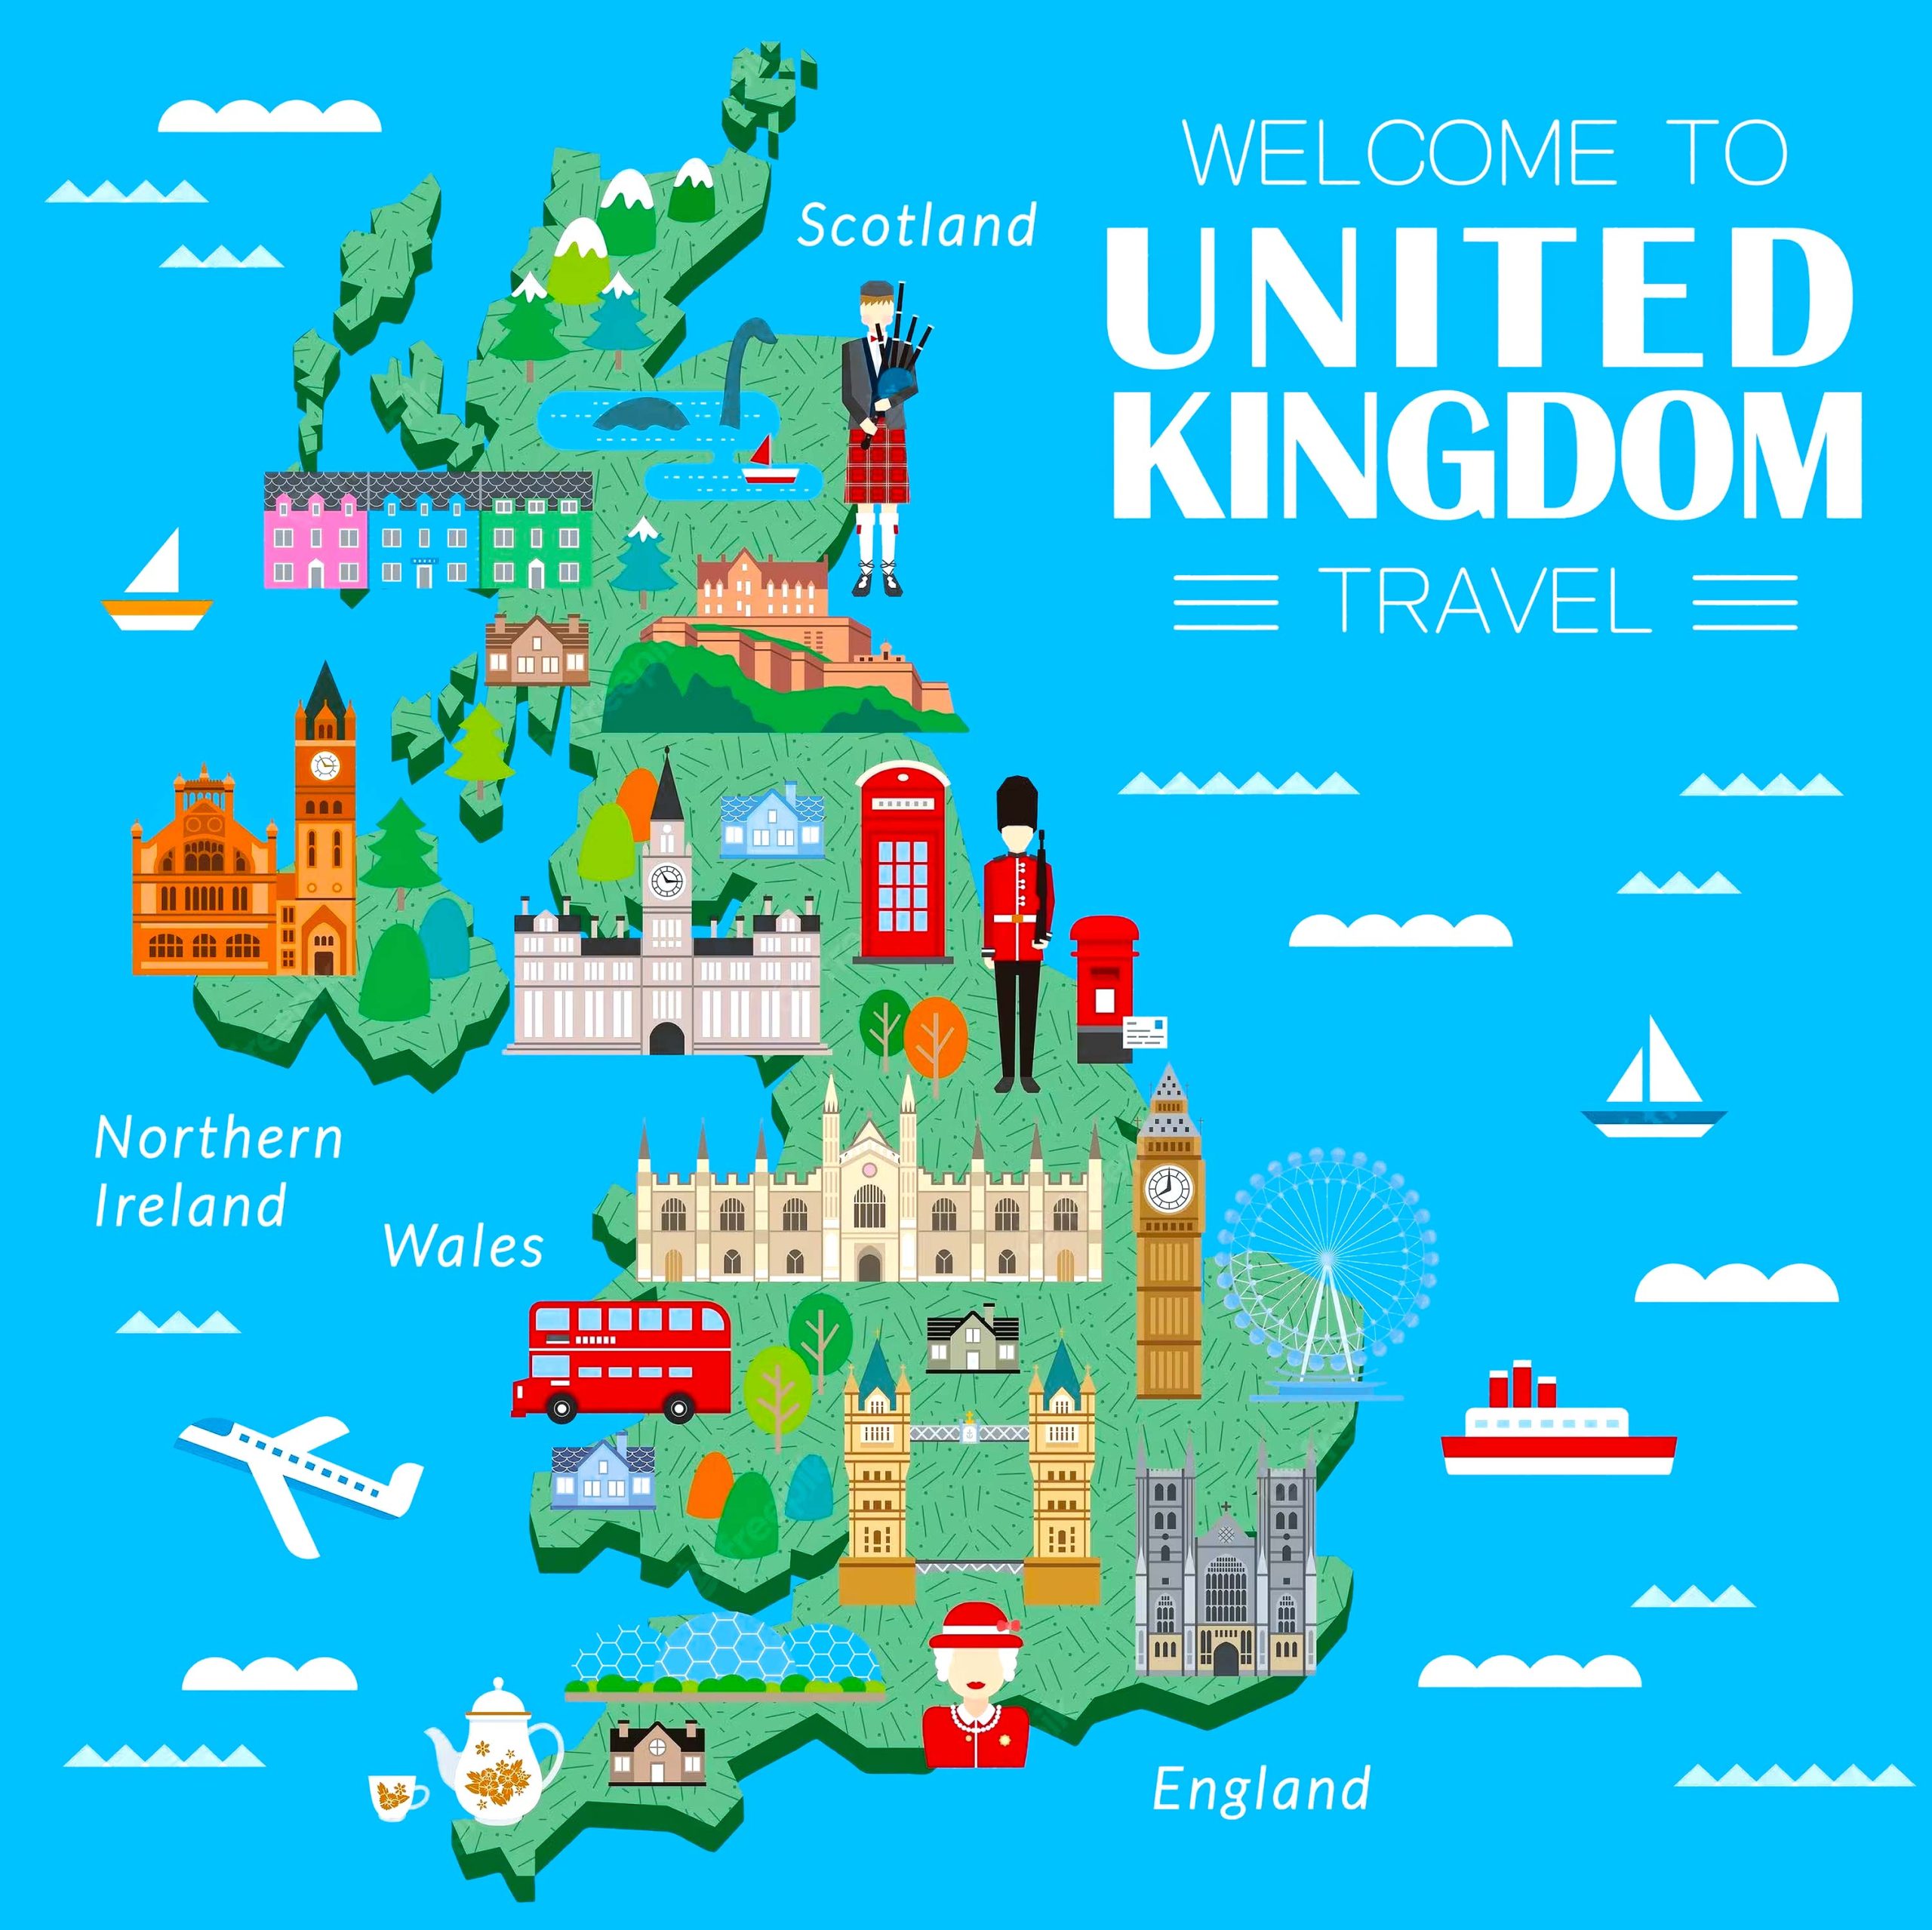 United Kingdom Travel (Tourist) Map